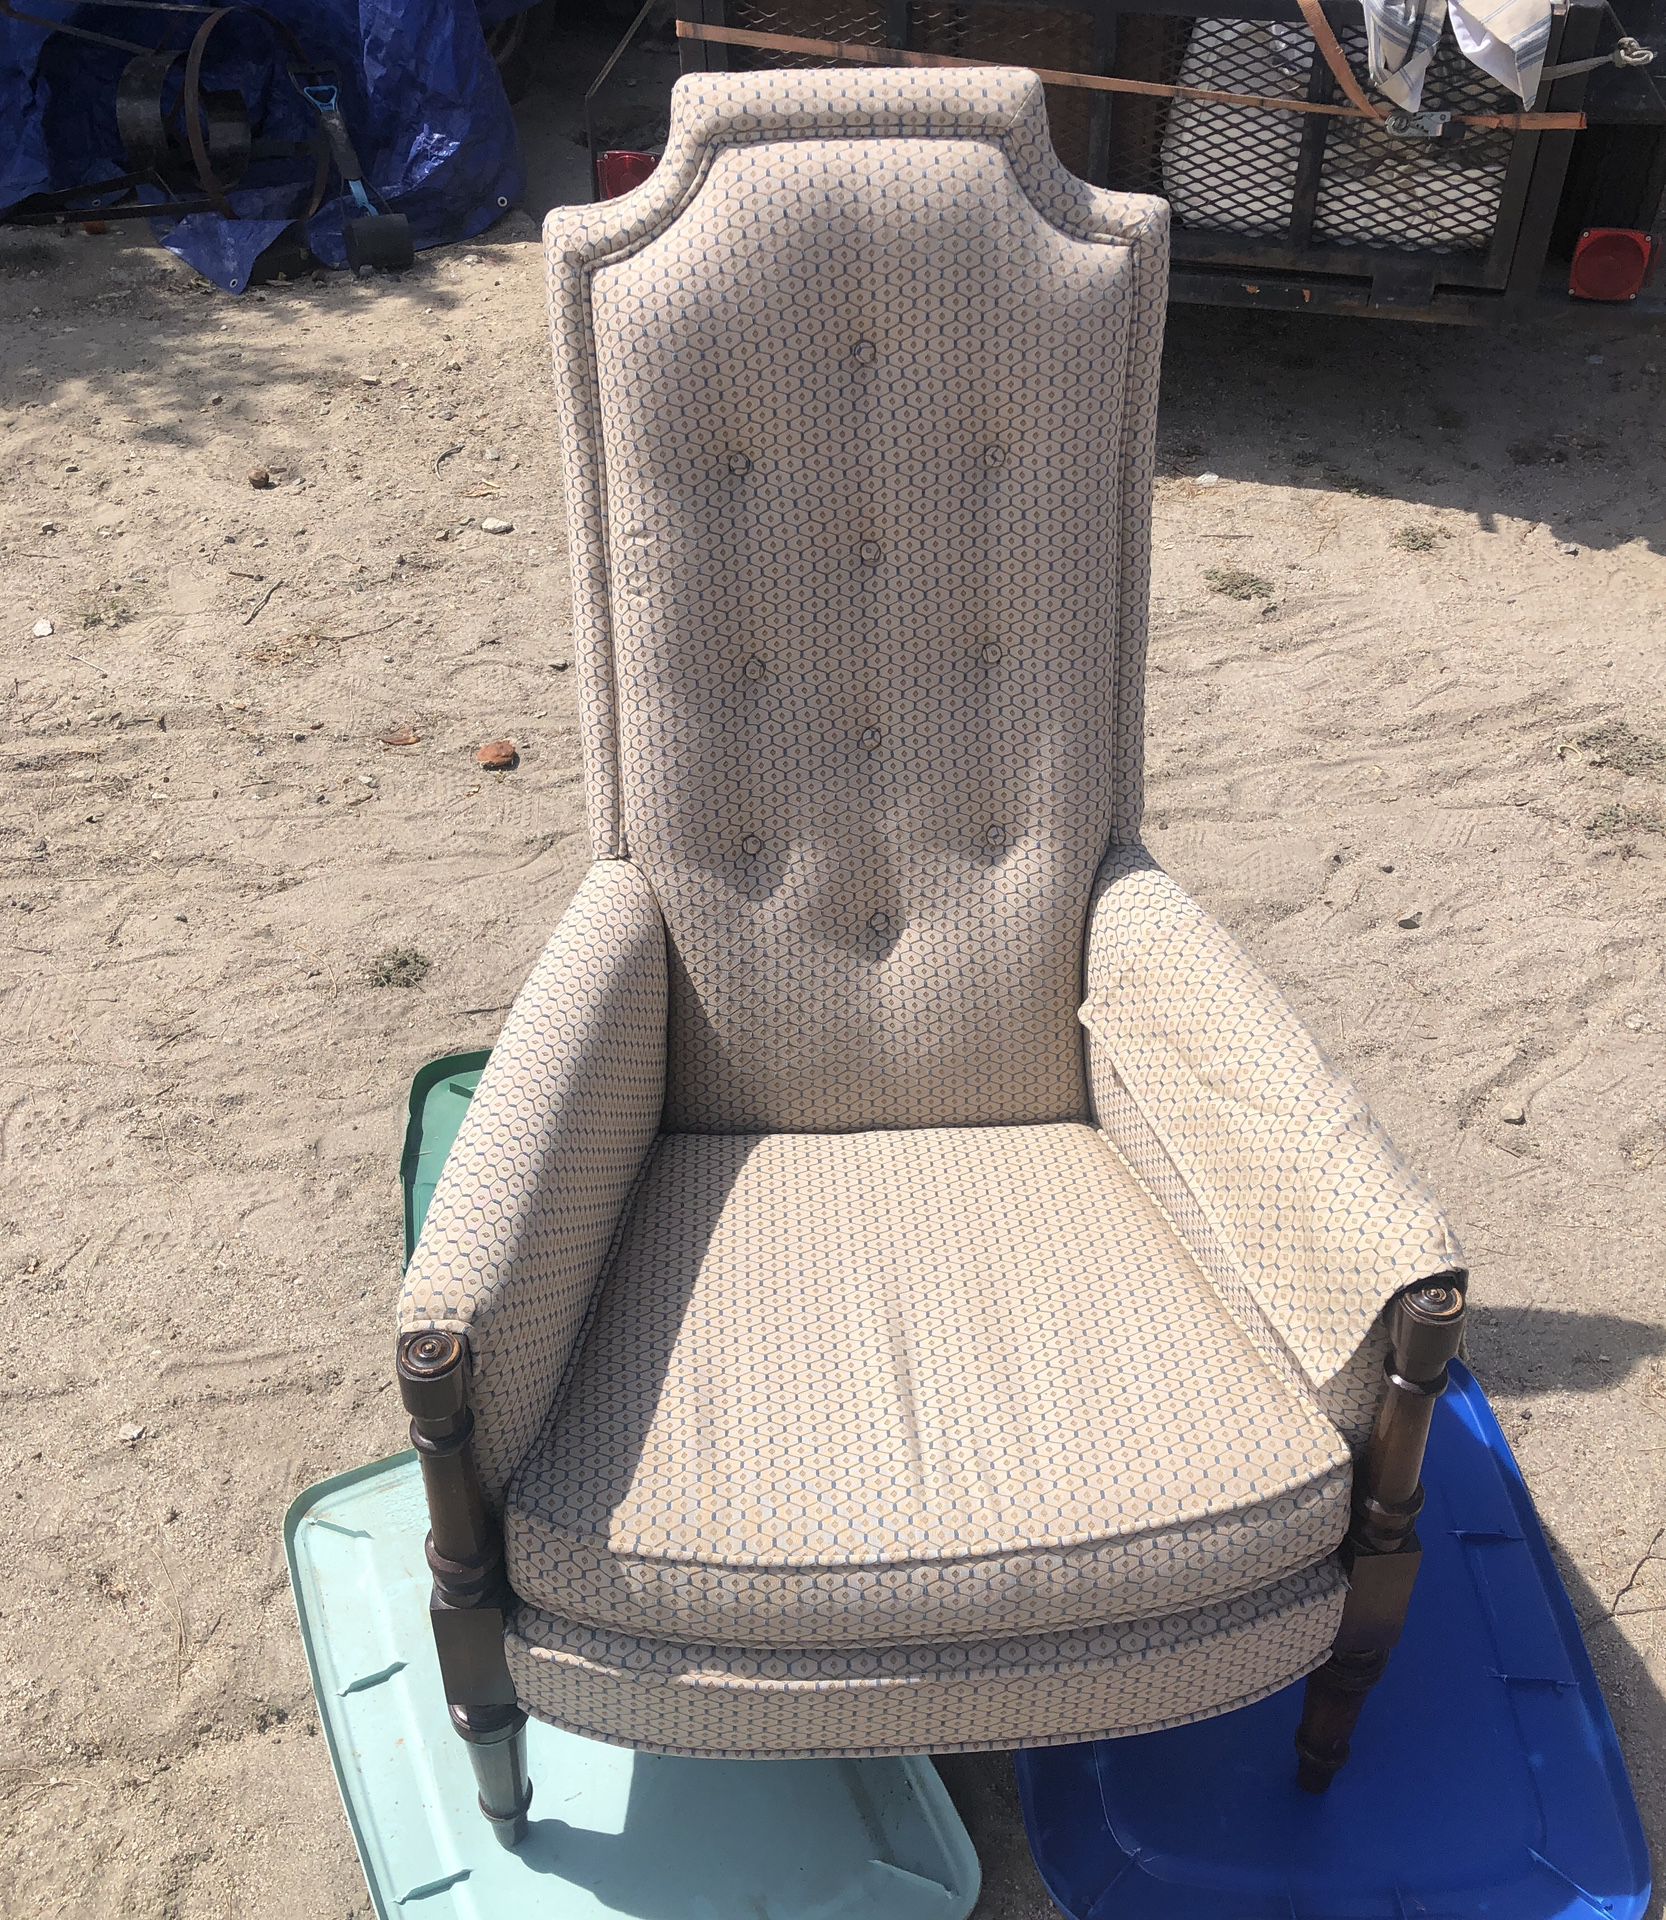 Antique High Back Chair